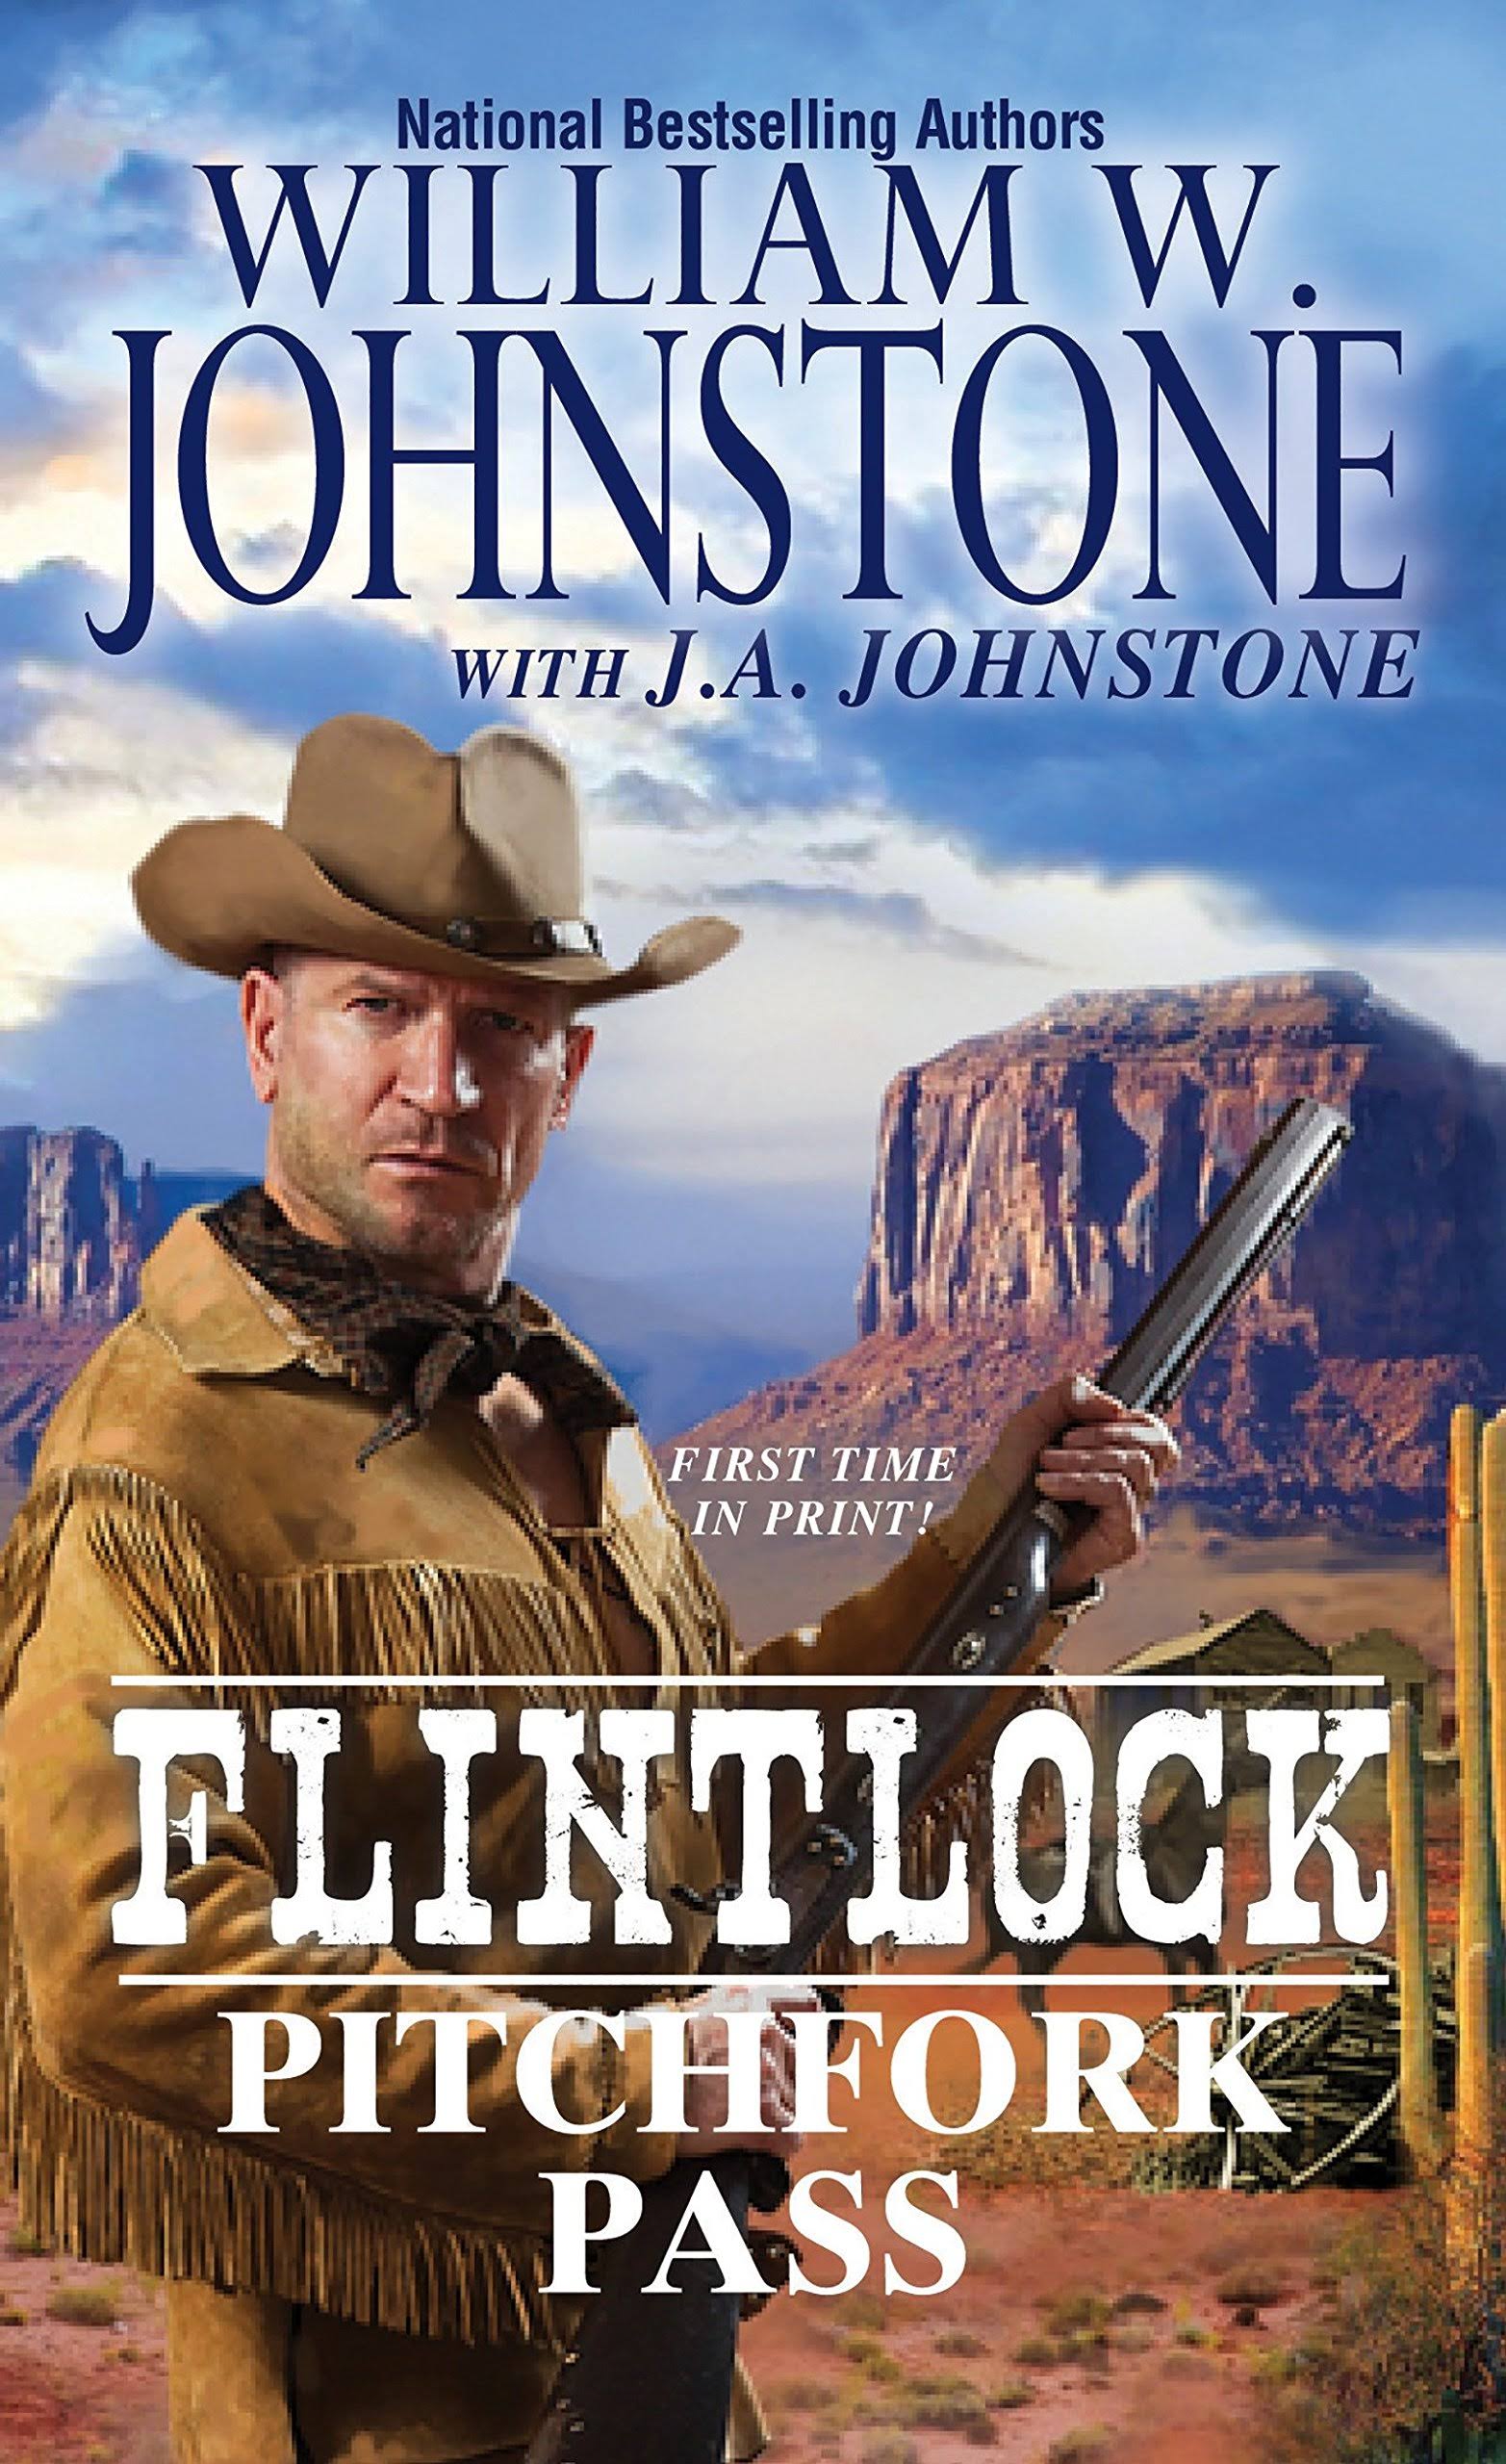 Pitchfork Pass: Flintlock - William W. Johnstone and J.A. Johnstone